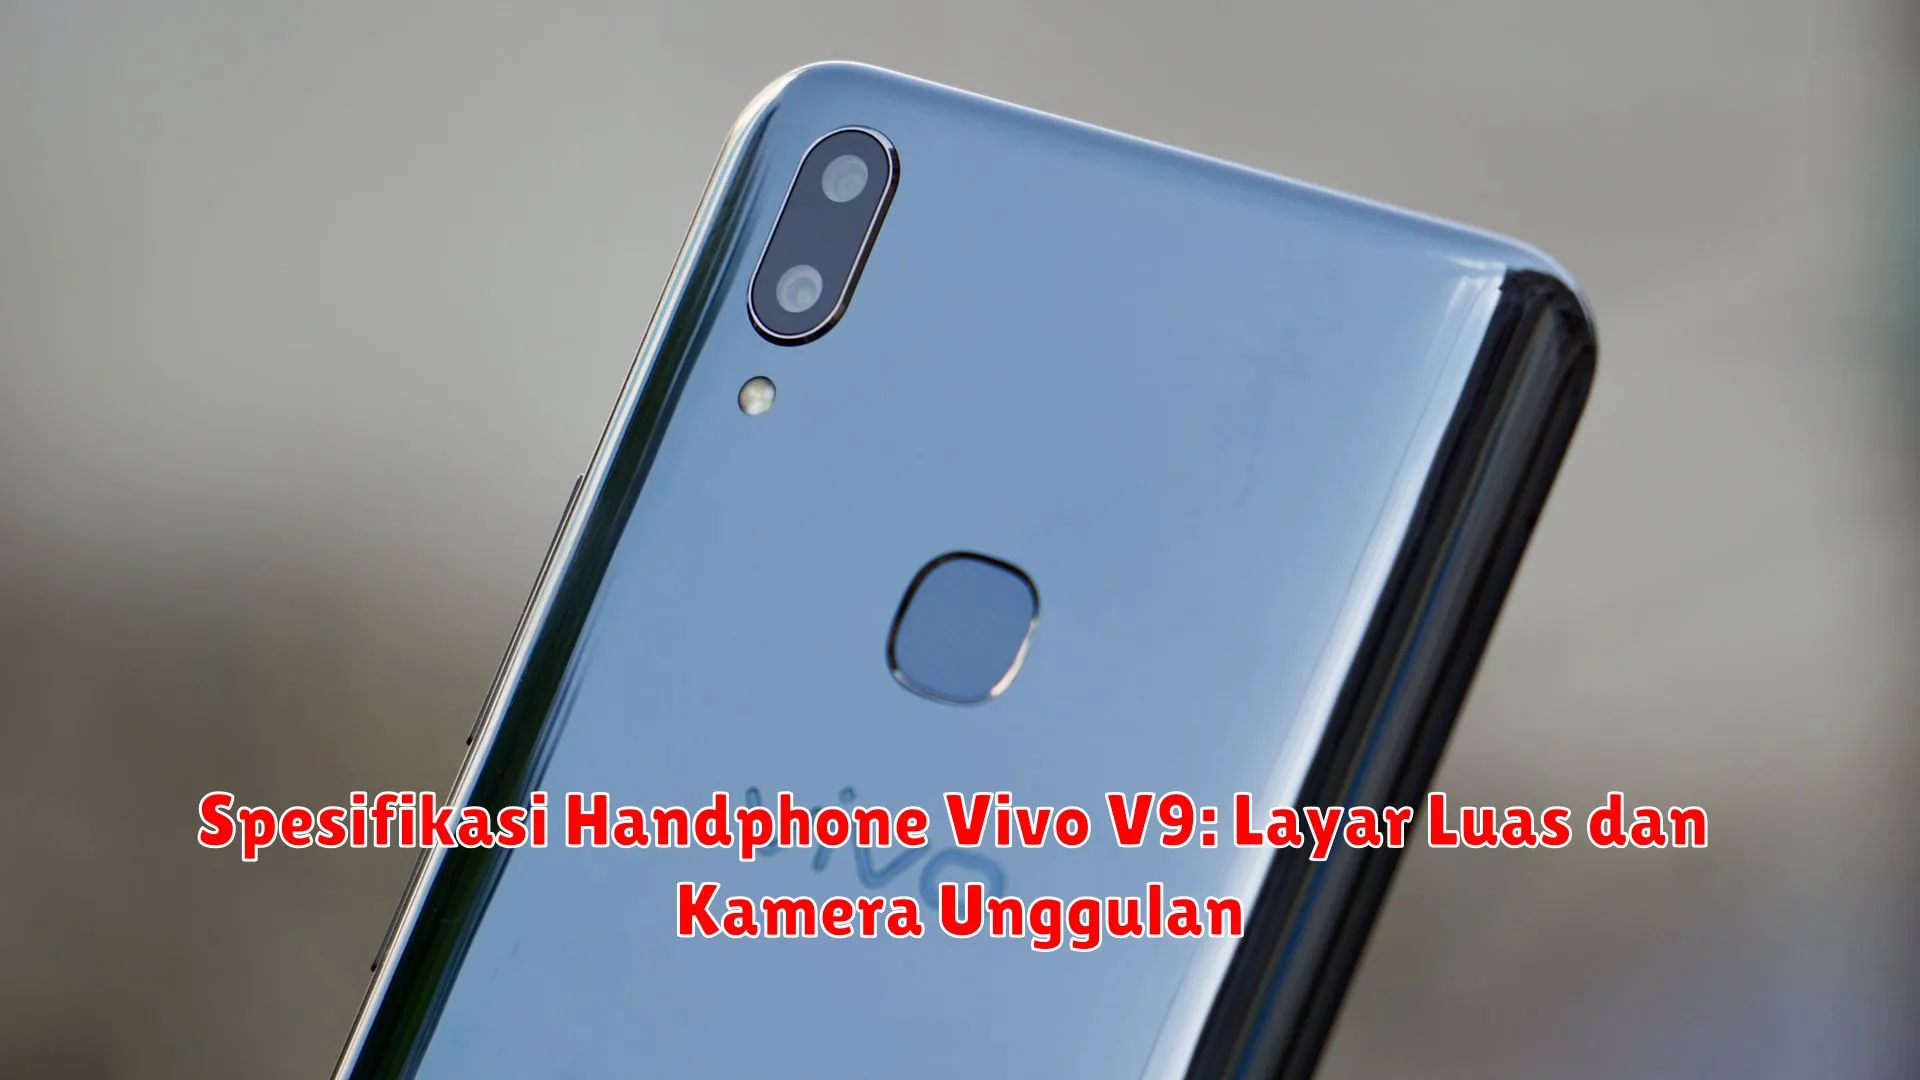 Spesifikasi Handphone Vivo V9: Layar Luas dan Kamera Unggulan